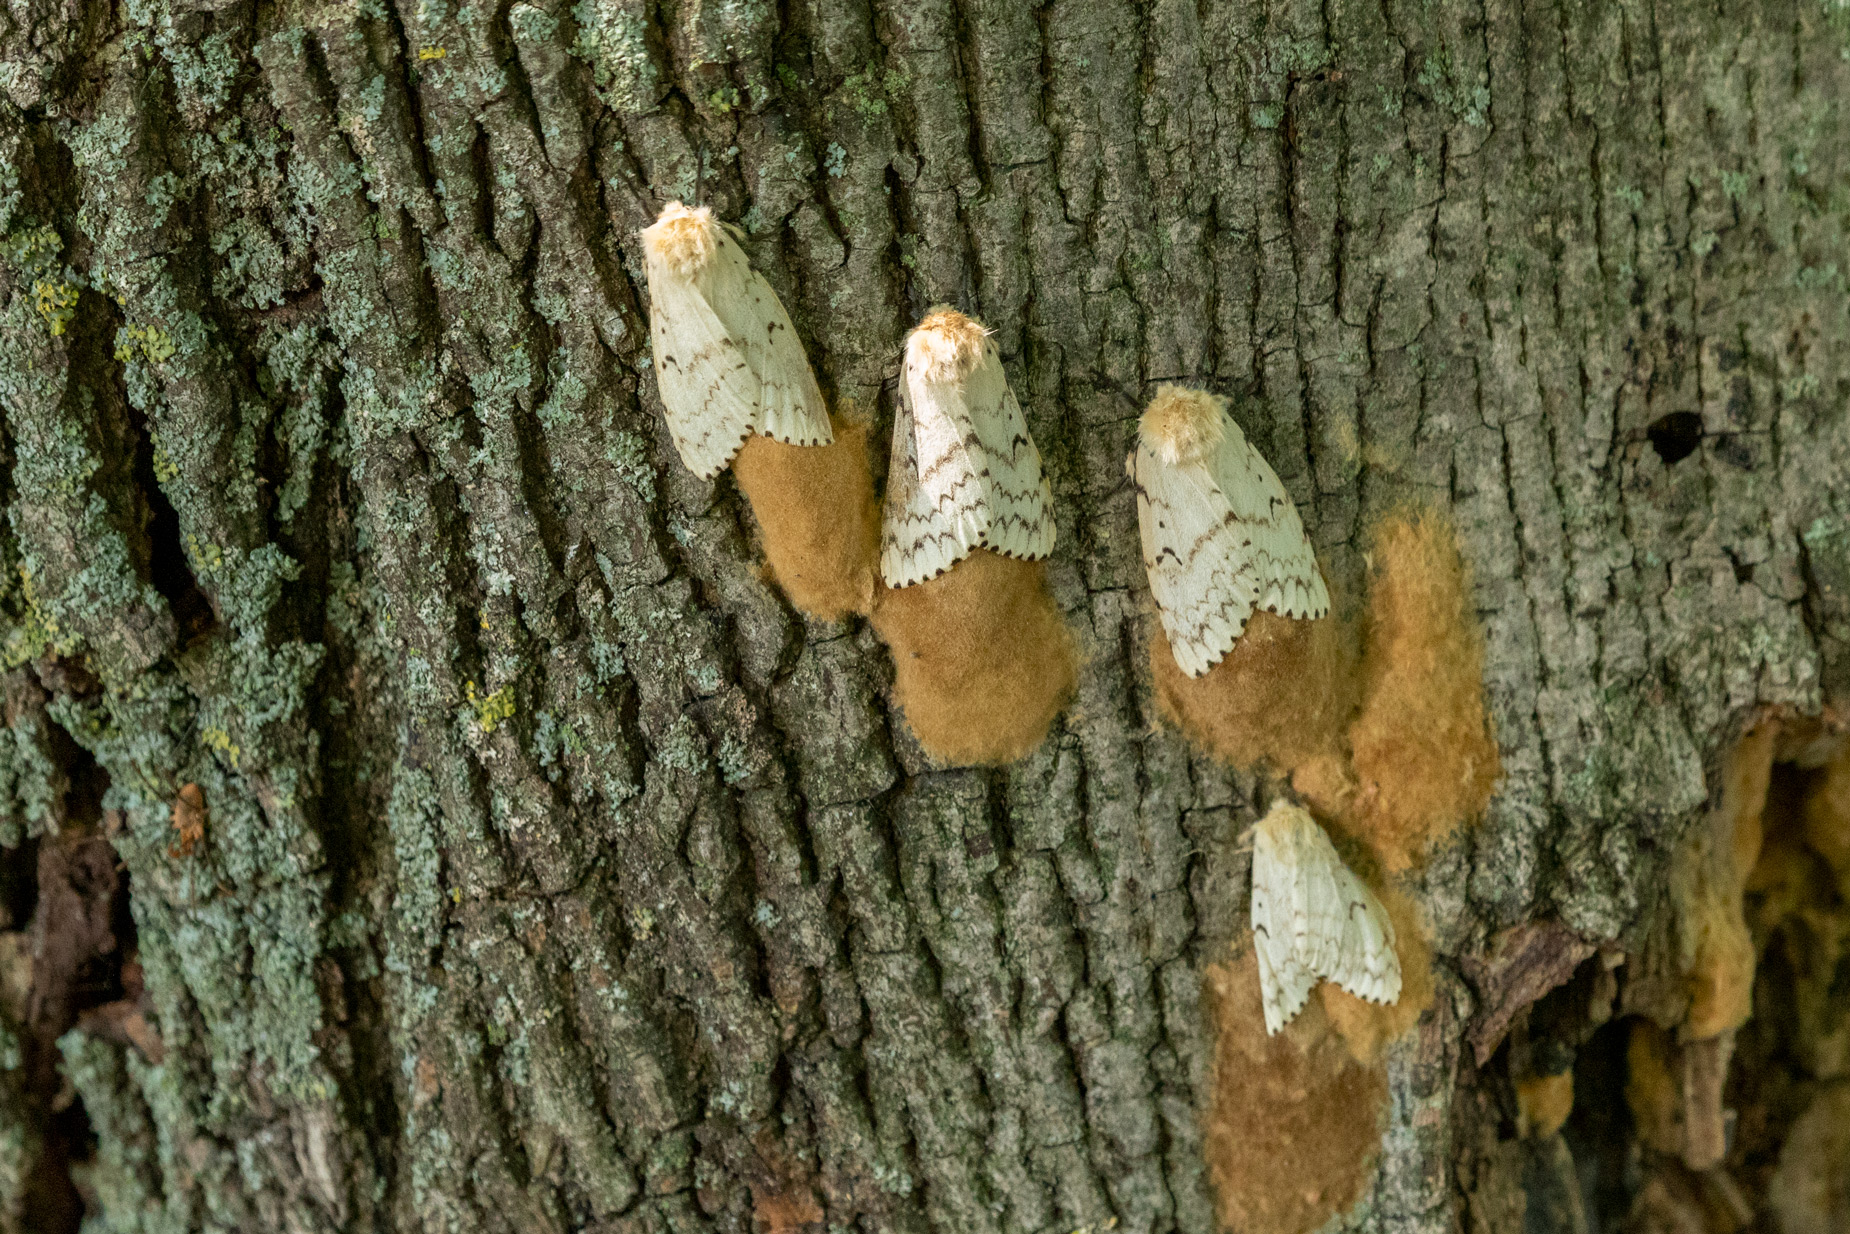 Several tan moths black stripes/spots clinging to tree bark